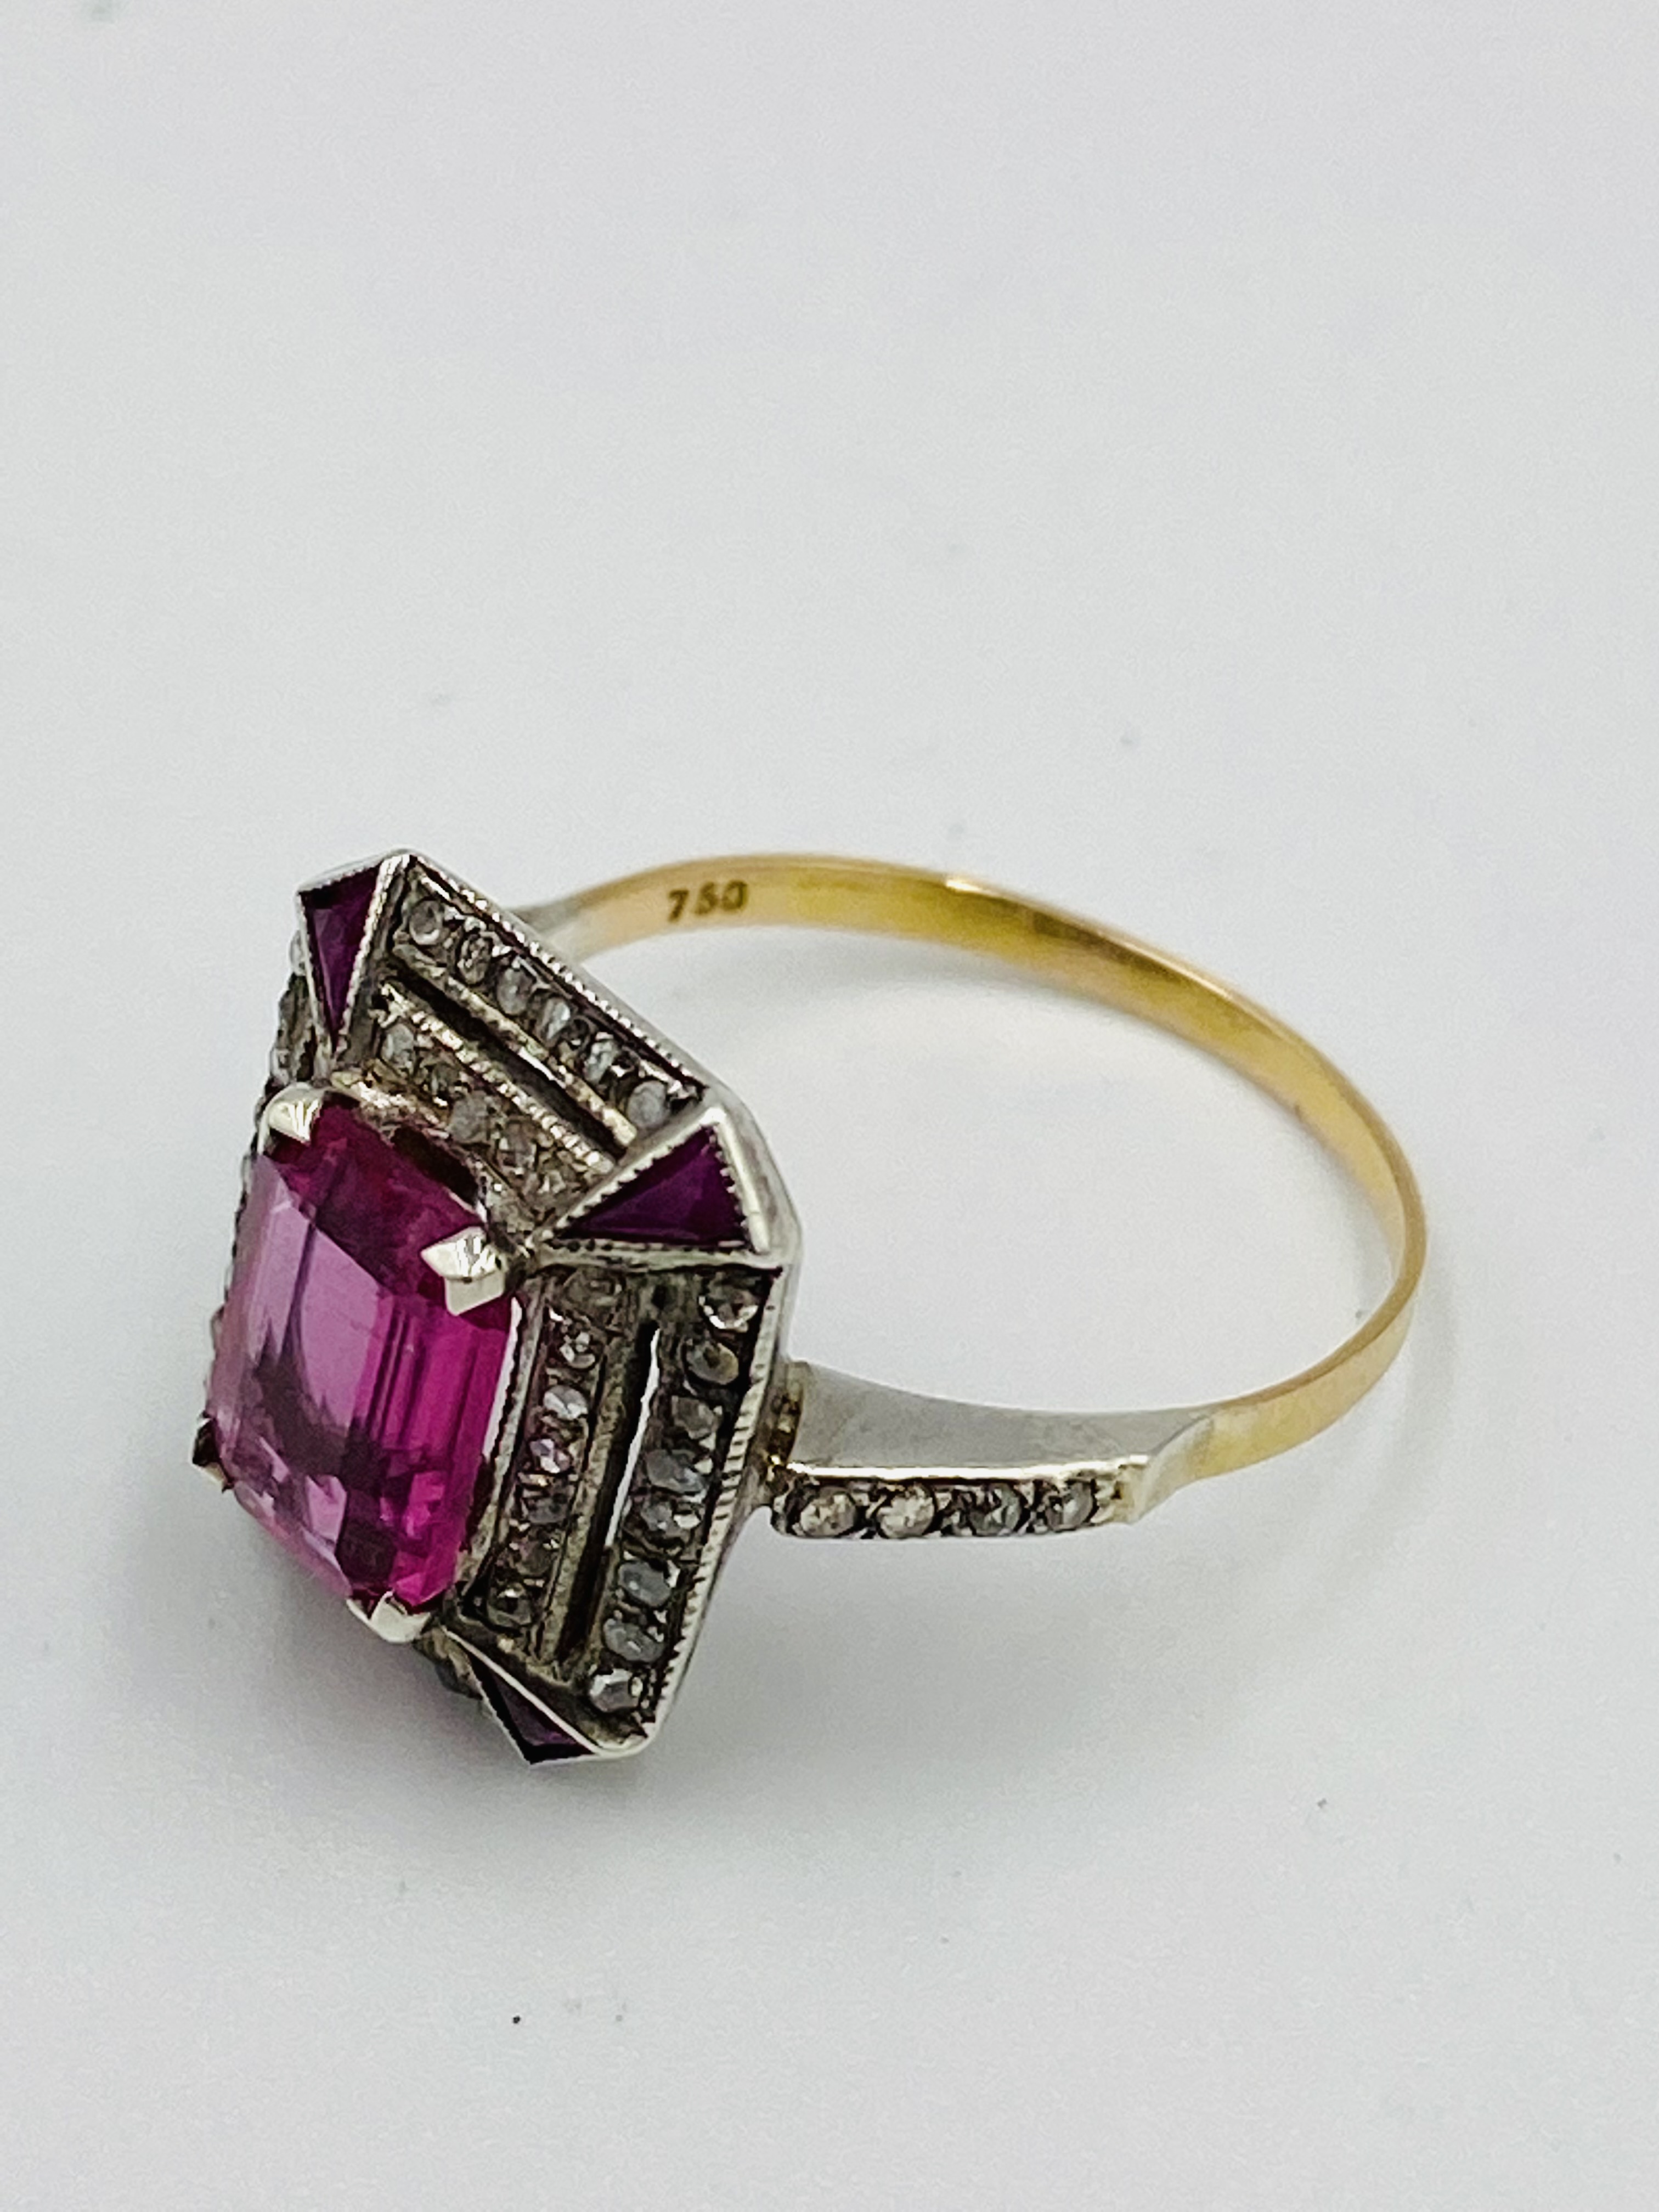 18ct gold, pink tourmaline and diamond ring - Image 6 of 6